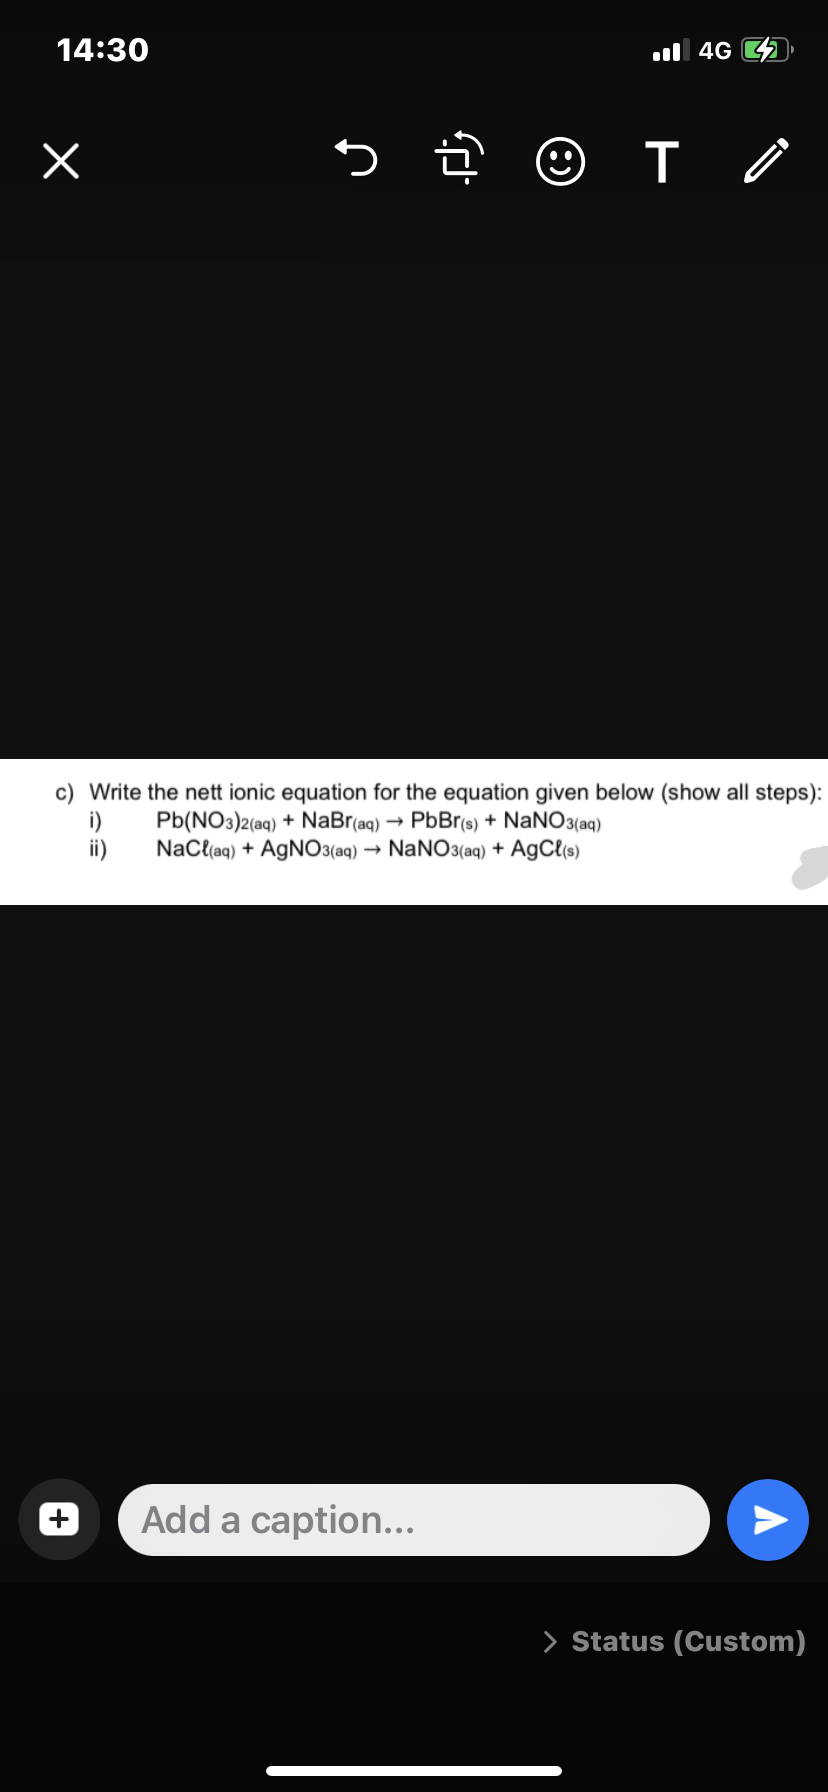 14:30
x
5.
☺
Add a caption...
4G
T /
c) Write the nett ionic equation for the equation given below (show all steps):
Pb(NO3)2(aq) + NaBr(aq) → PbBr(s) + NaNO3(aq)
NaCl(aq) + AgNO3(aq) → NaNO3(aq) + AgCl(s)
ii)
A
> Status (Custom)